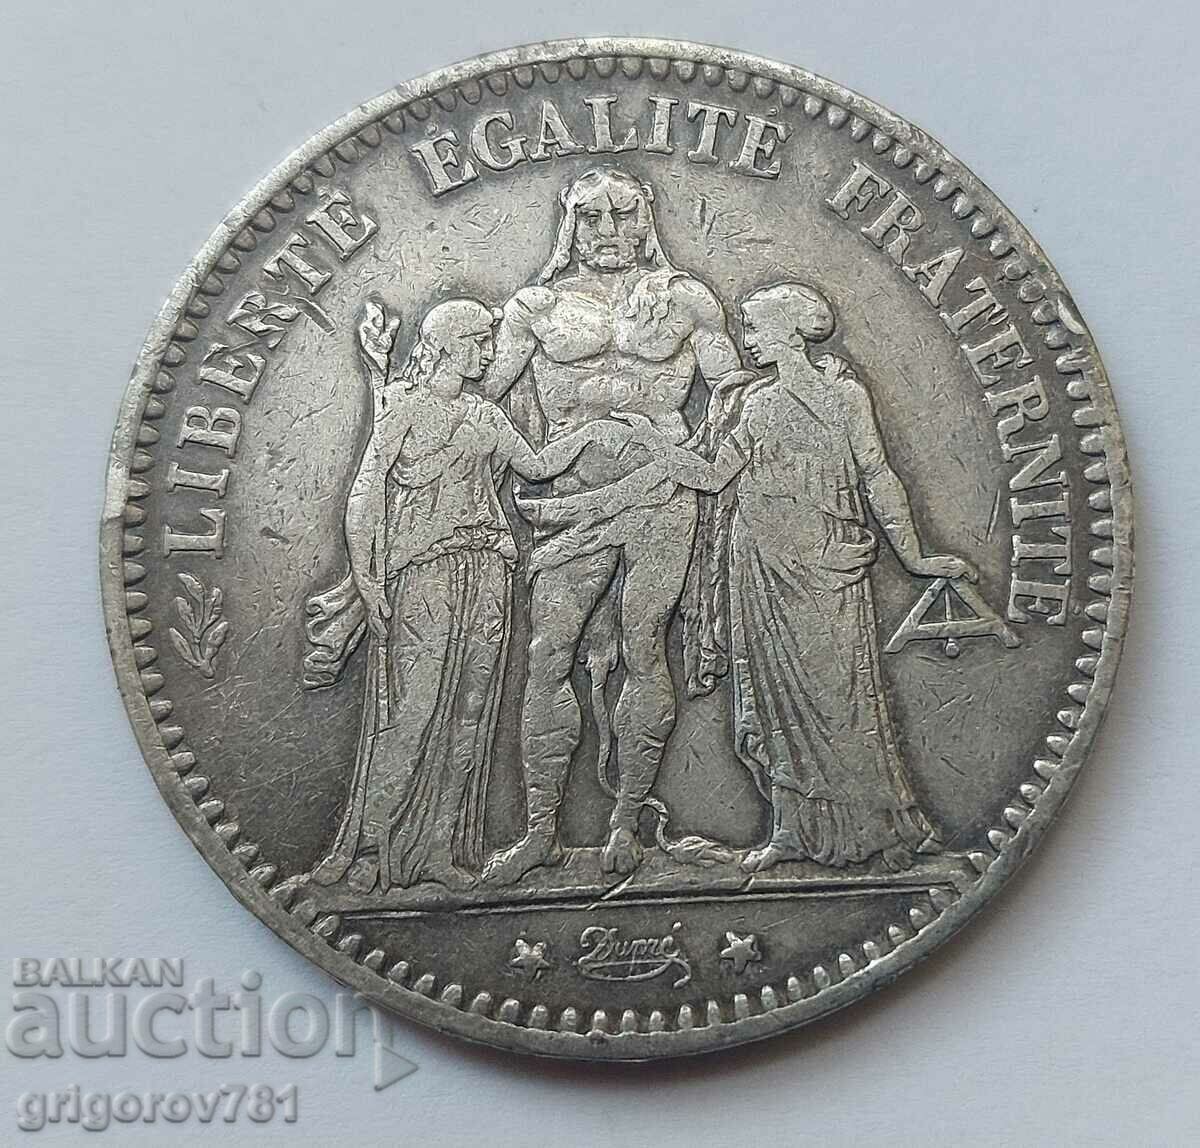 5 Francs Silver France 1875 A Silver Coin #151